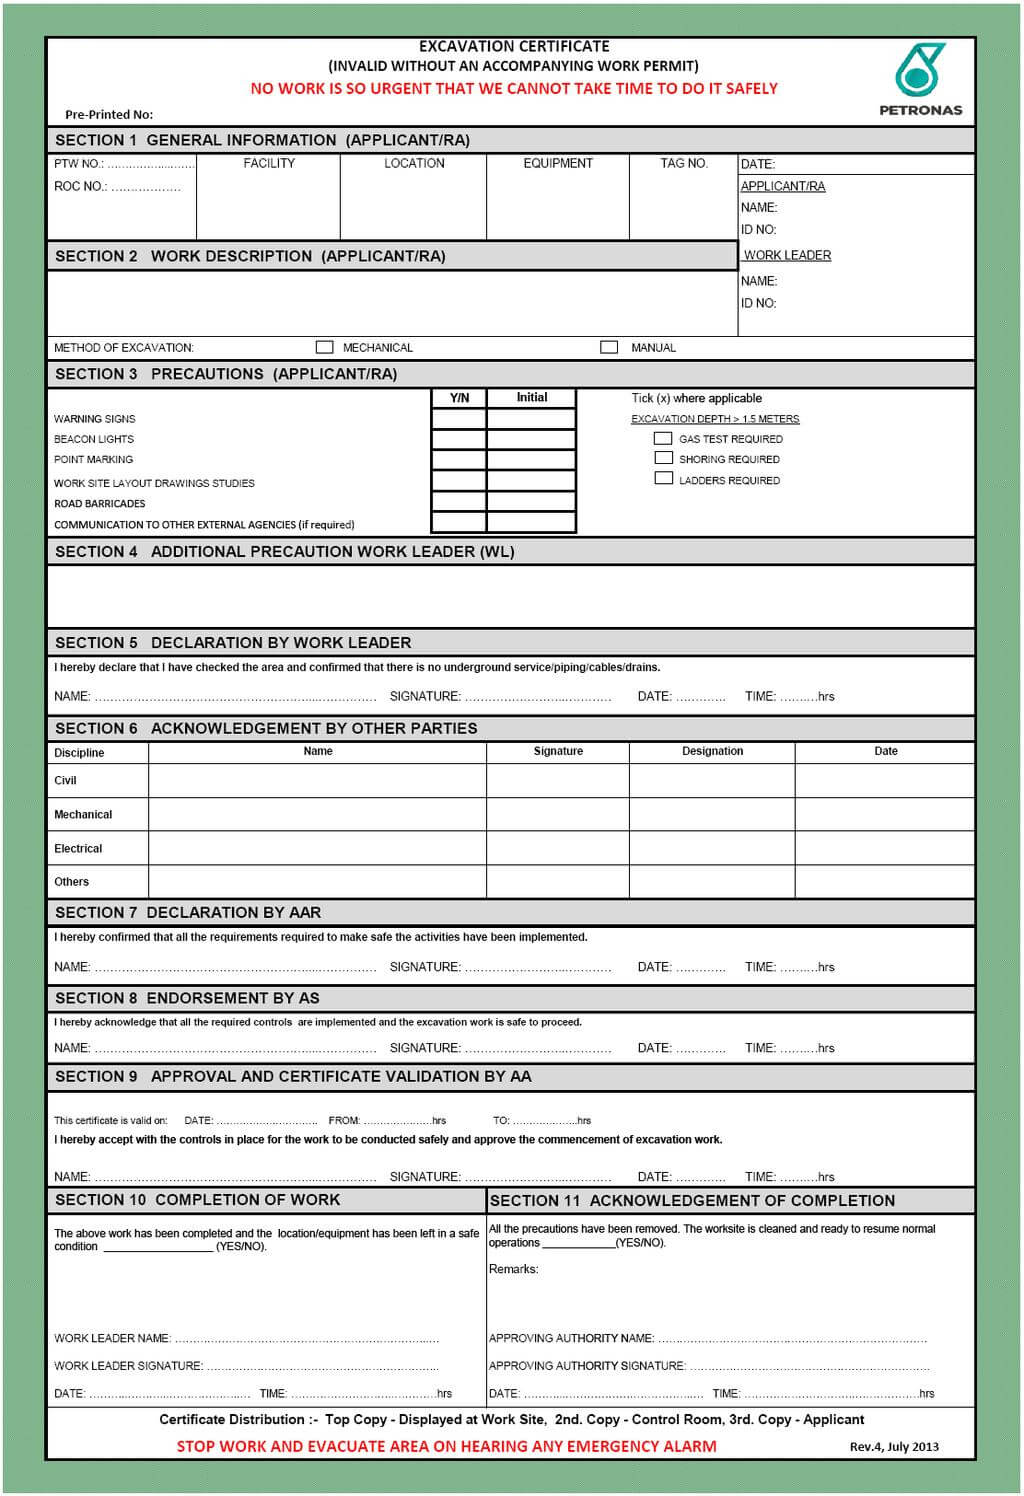 Petronas Carigali Permit To Work Procedure Petronas Carigali Regarding Electrical Isolation Certificate Template